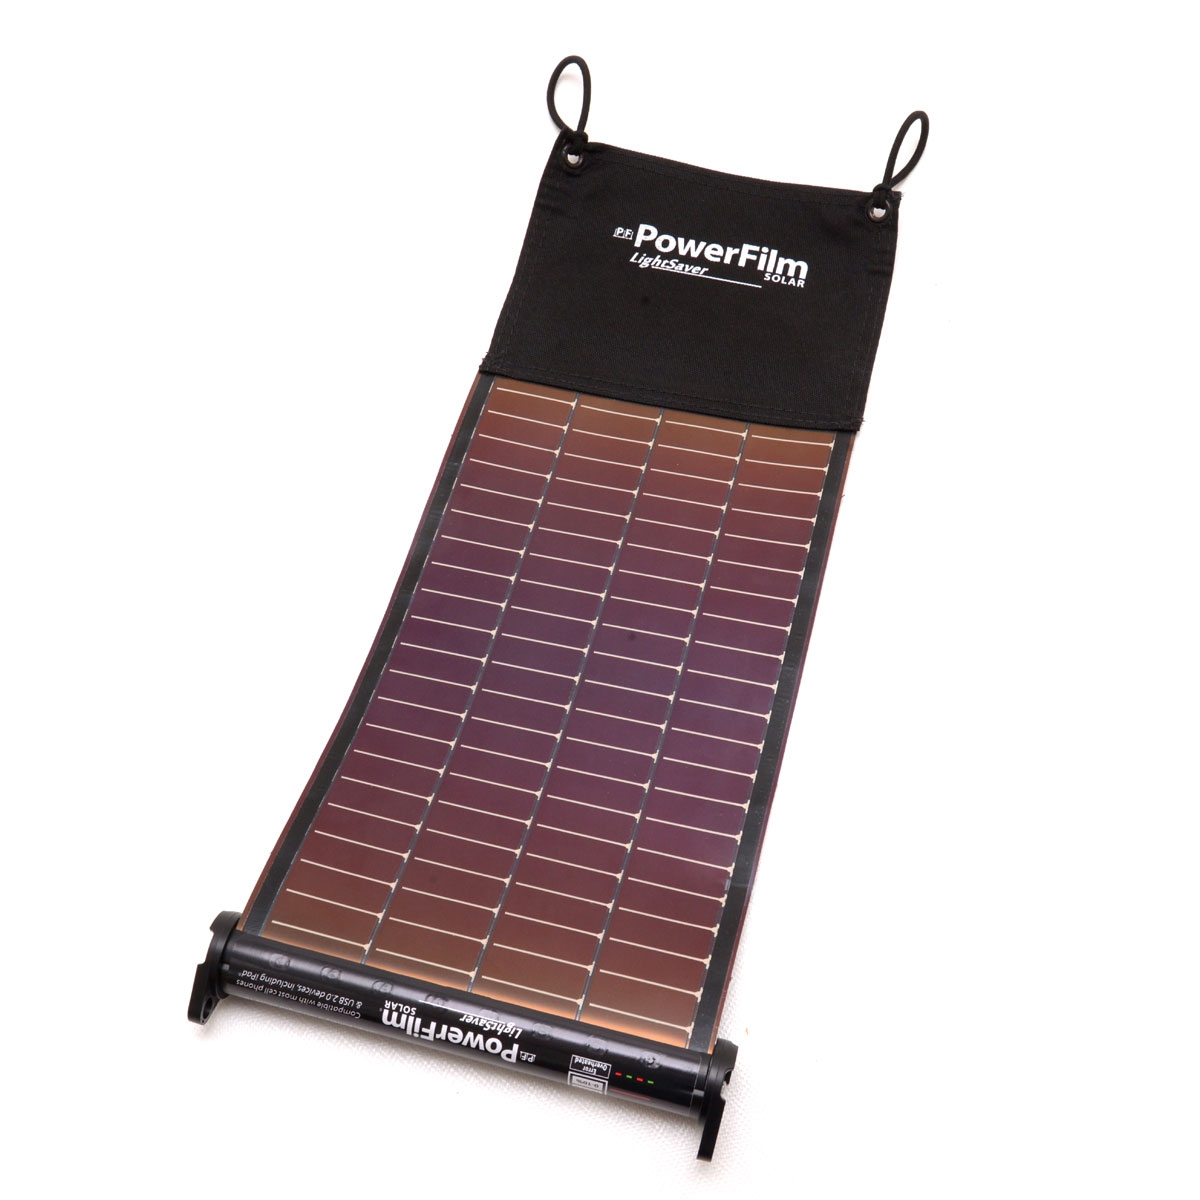 LightSaver V1 - rollbares Solarmodul mit USB Powerbank